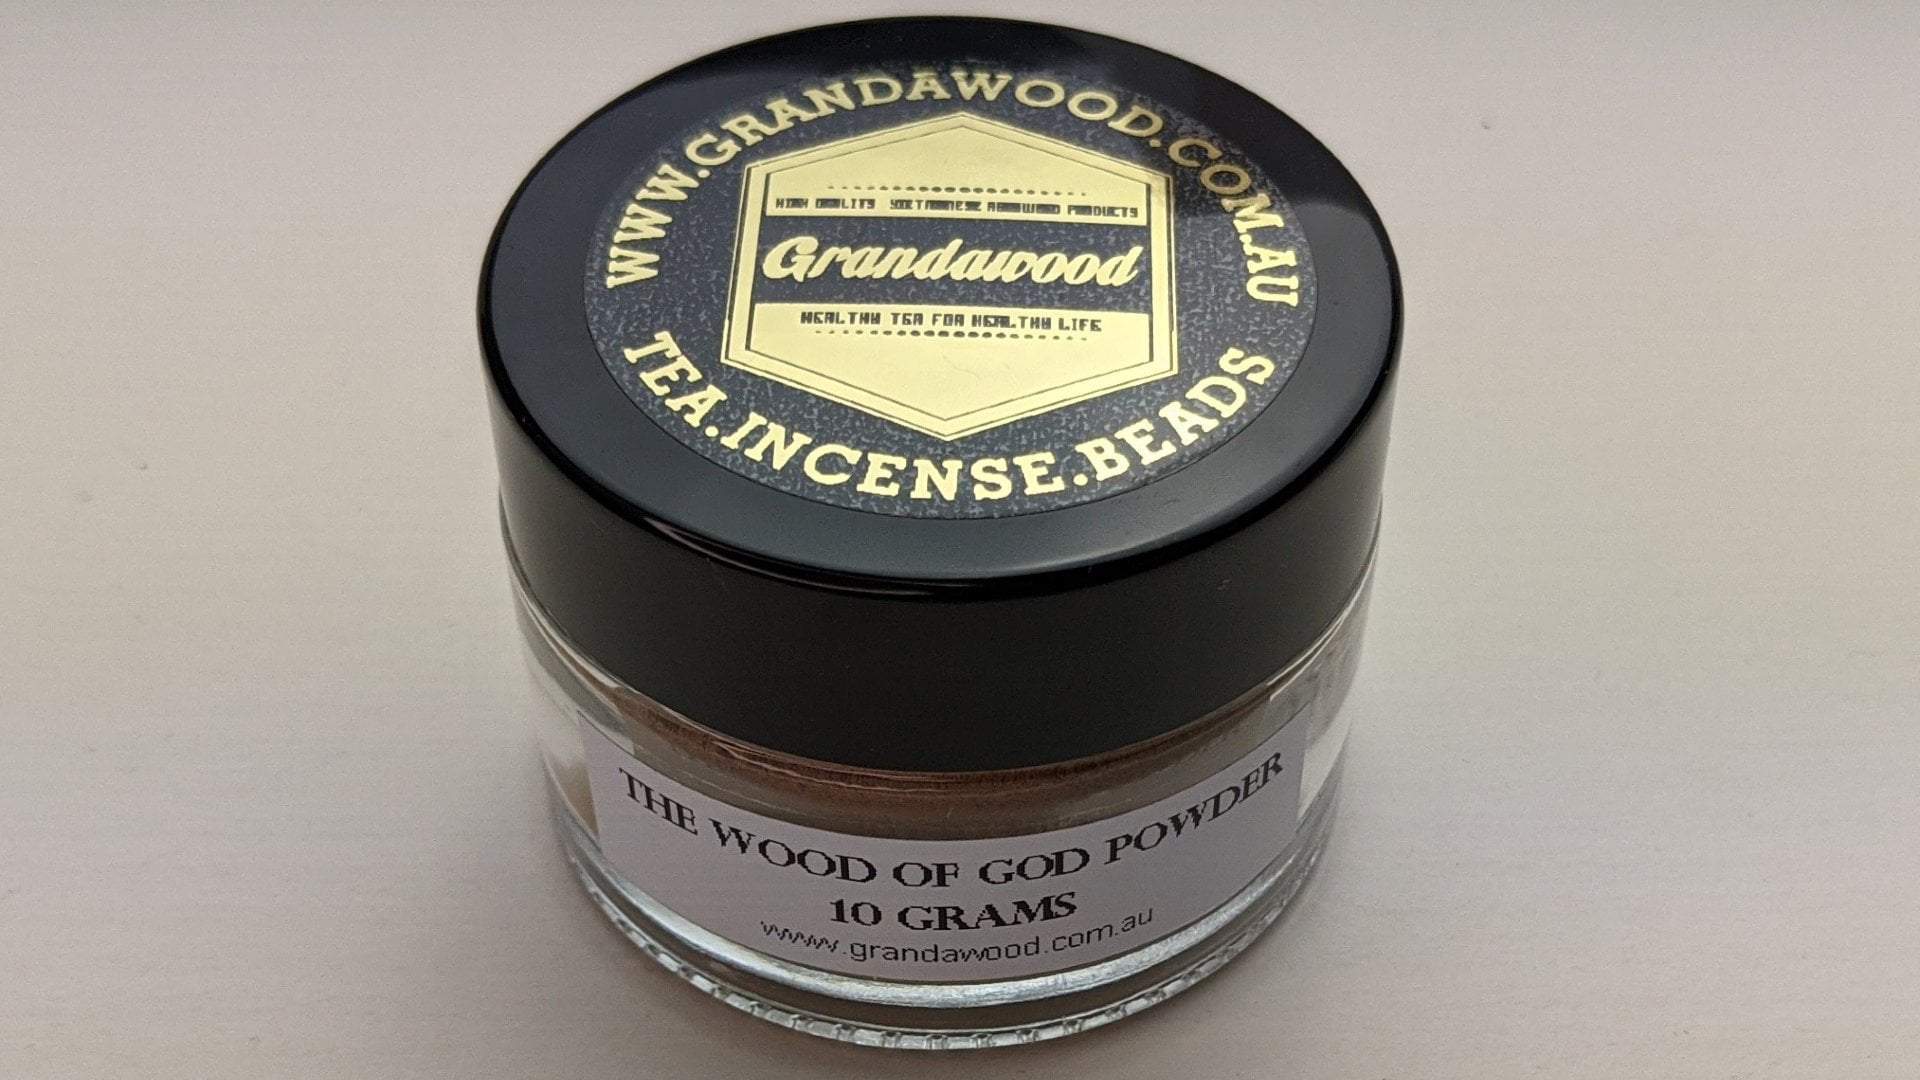 Wood of God Powder - Grandawood Agarwood -